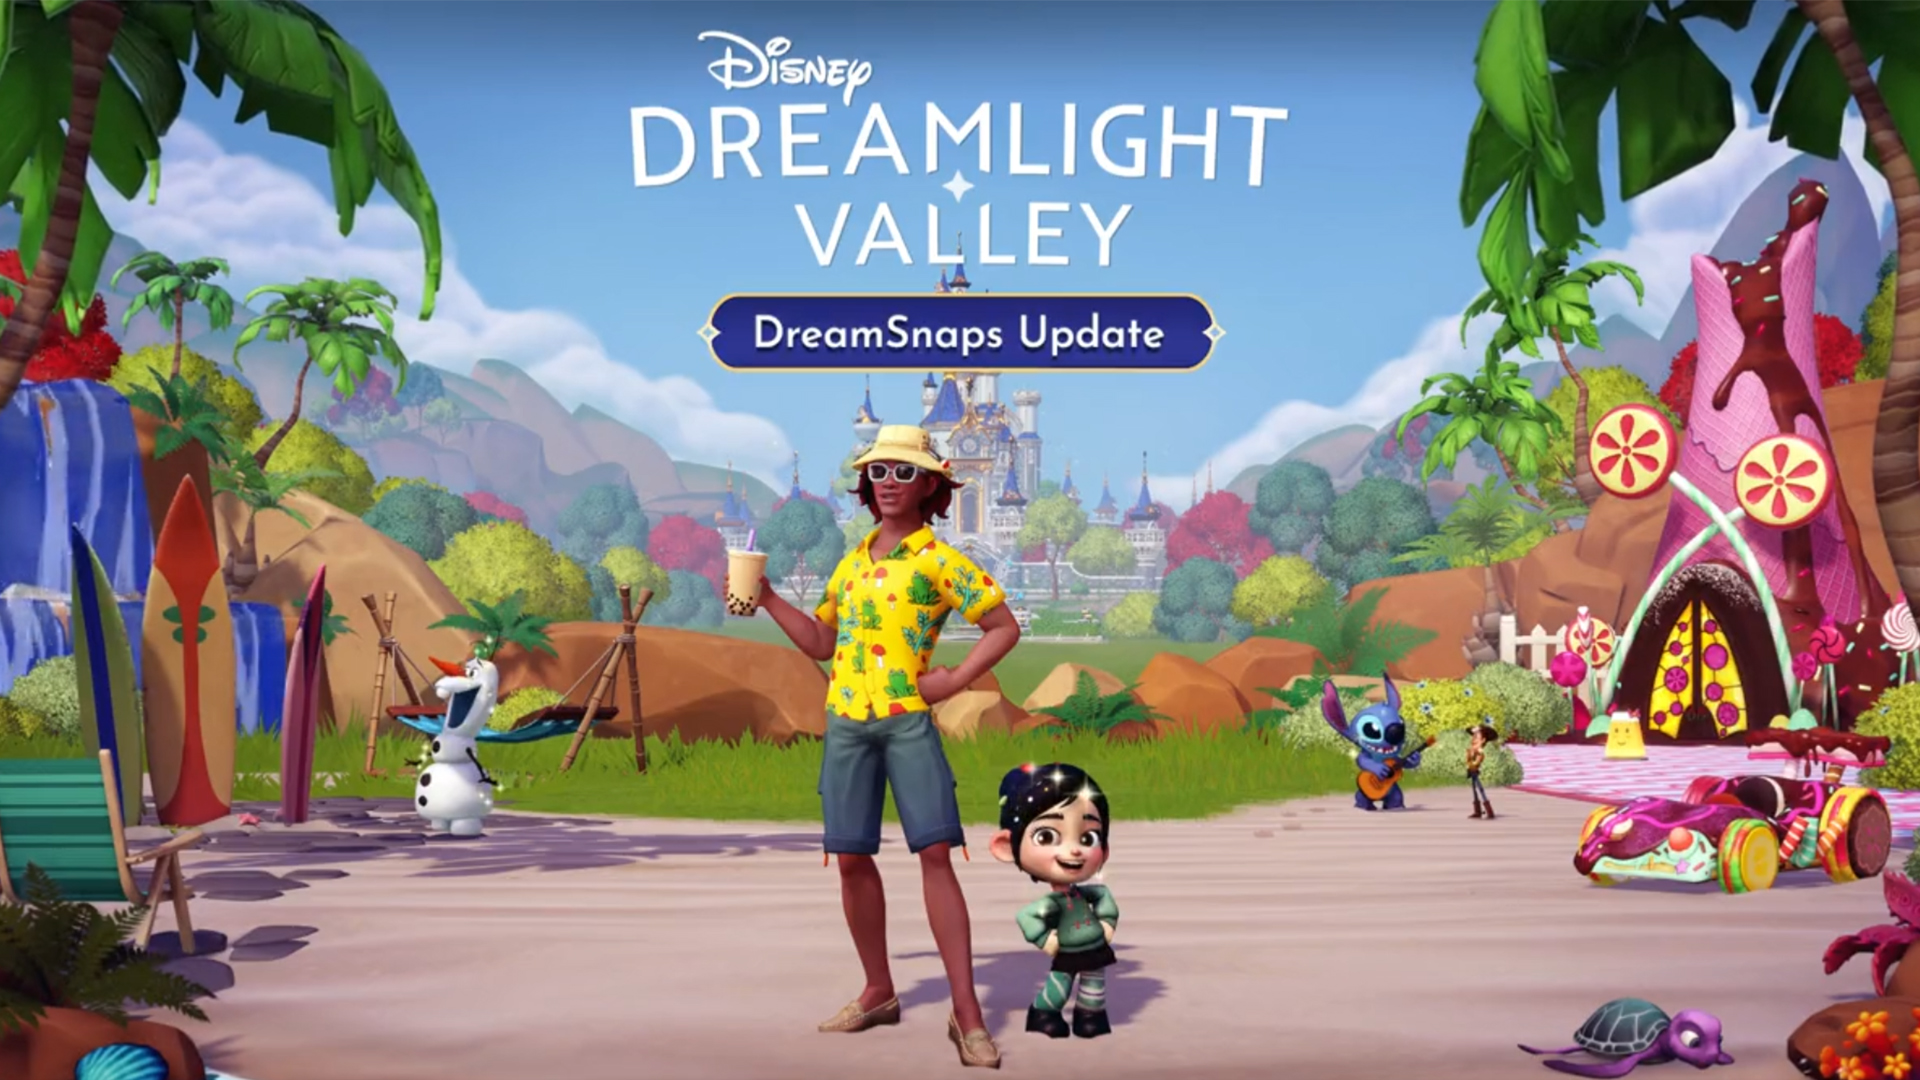 Disney Dreamlight Valley DreamSnaps update Vanellope release date & more